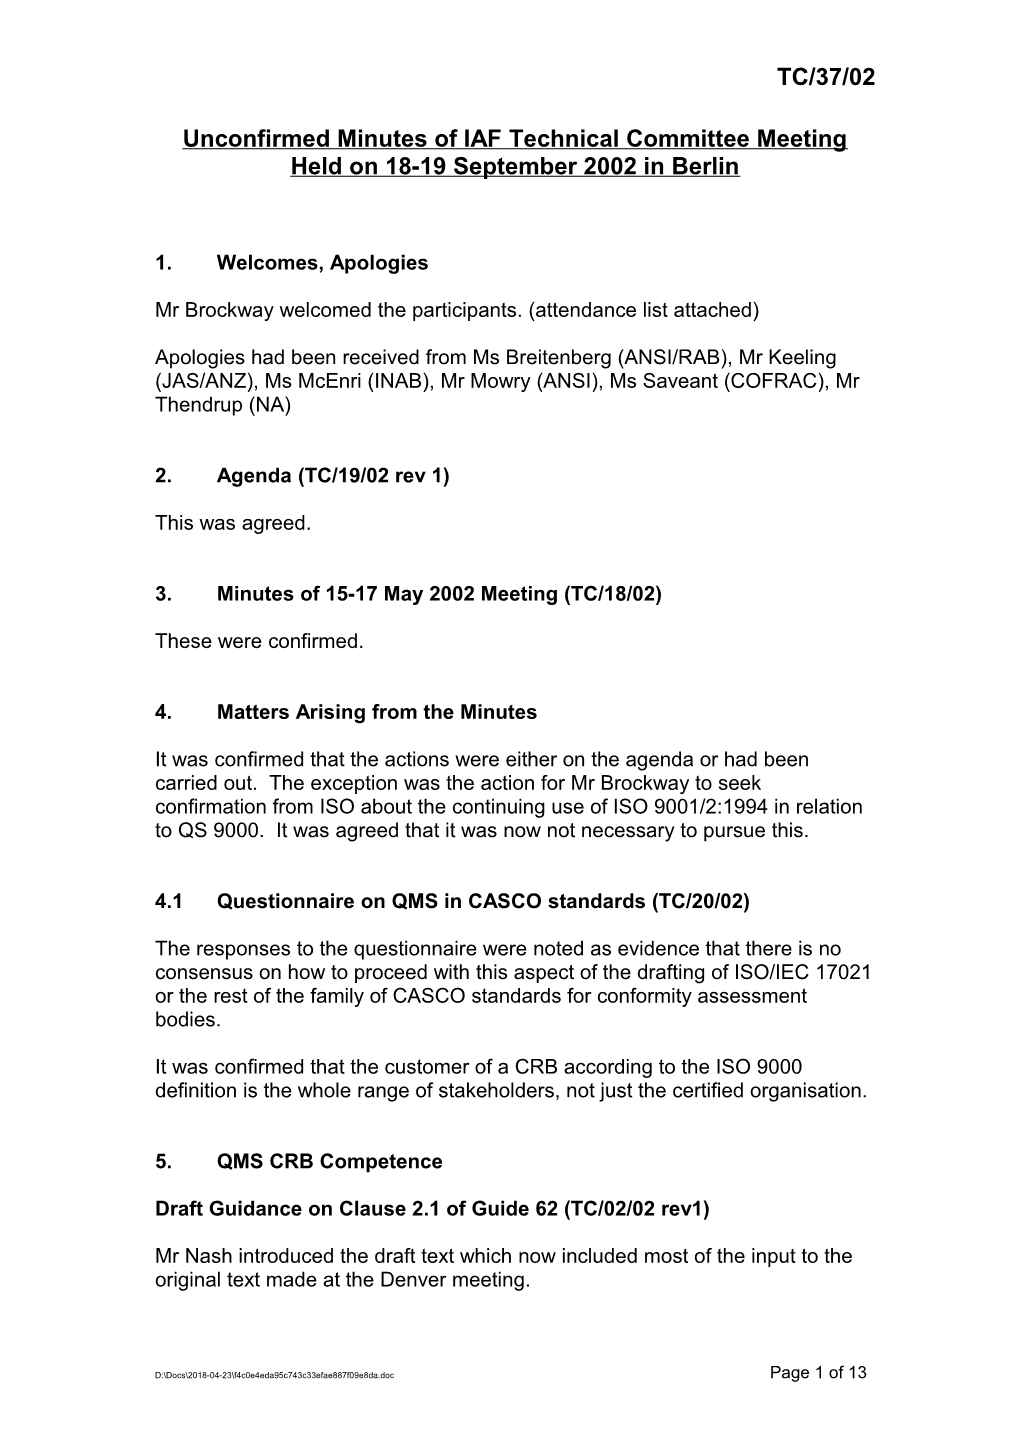 Unconfirmed Minutes of IAF WG1 Meeting